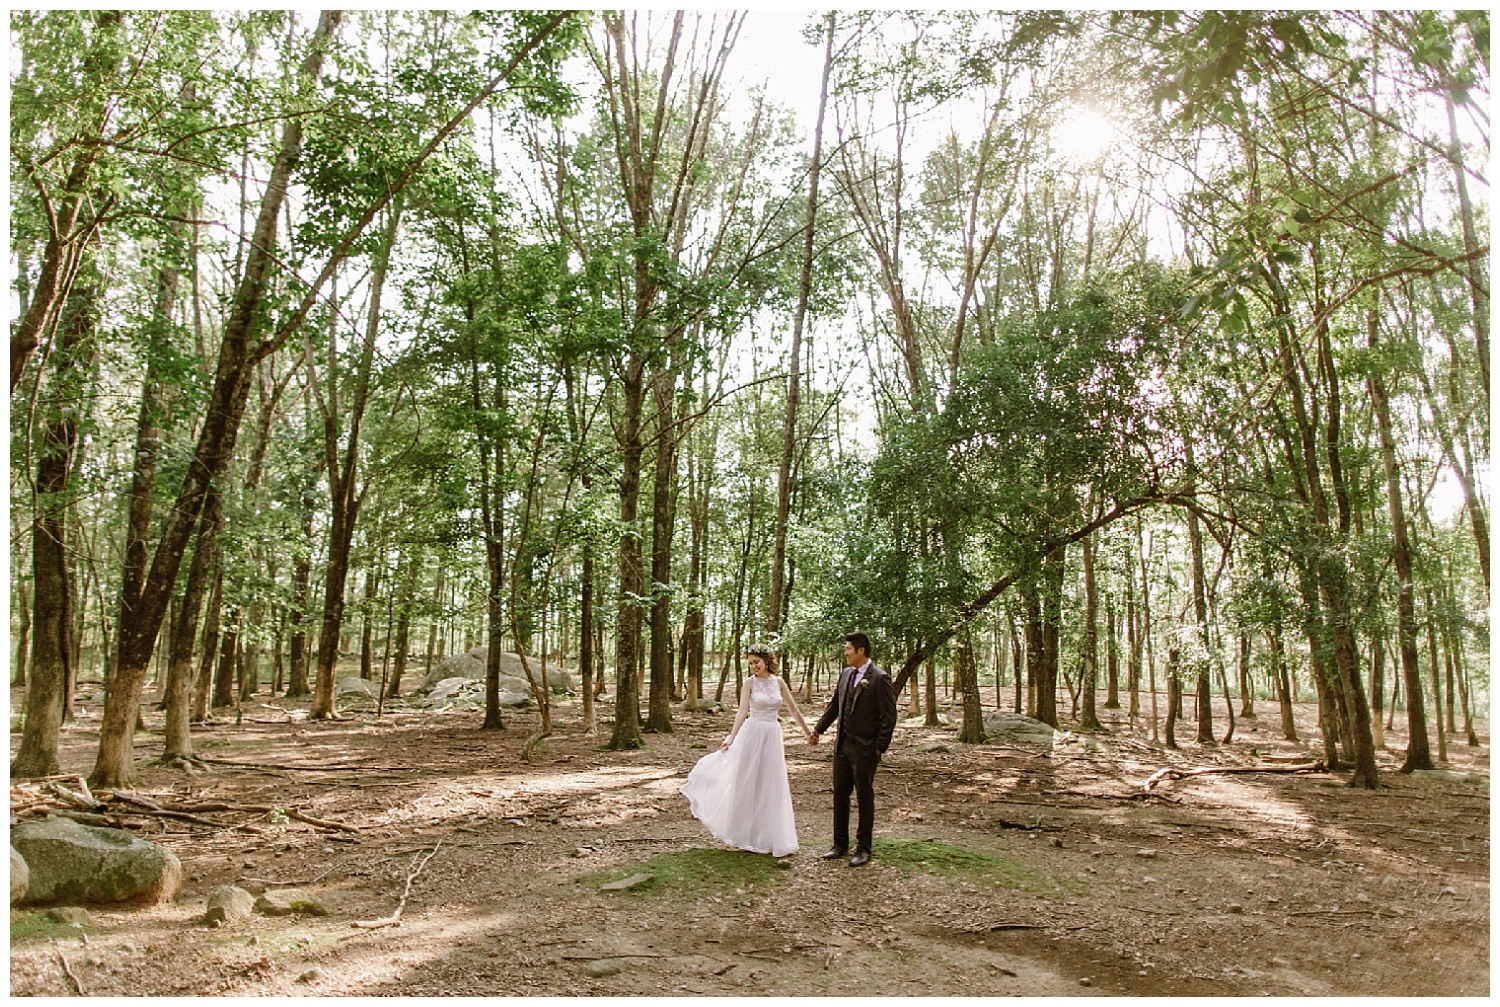 Intimate Massachusetts wedding at southwick's zoo